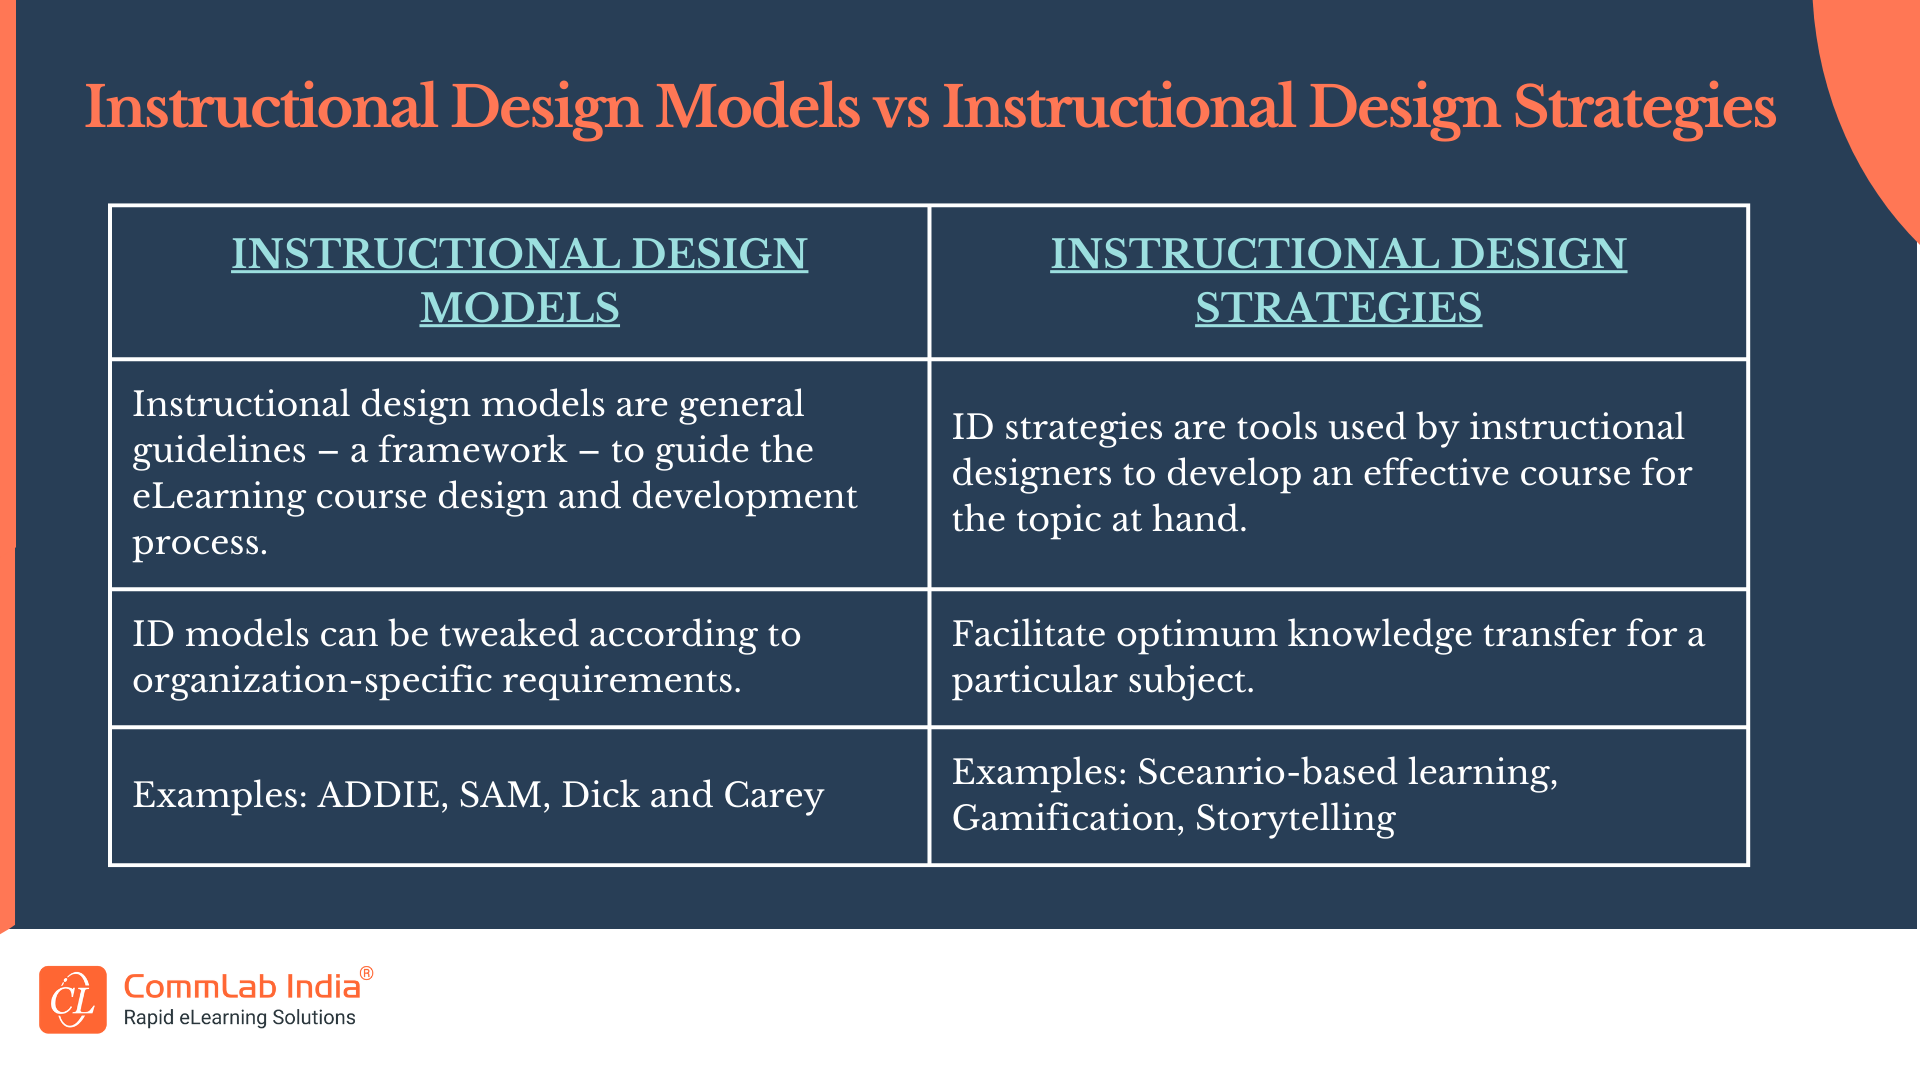 Instructional Design Models vs Instructional Design Strategies